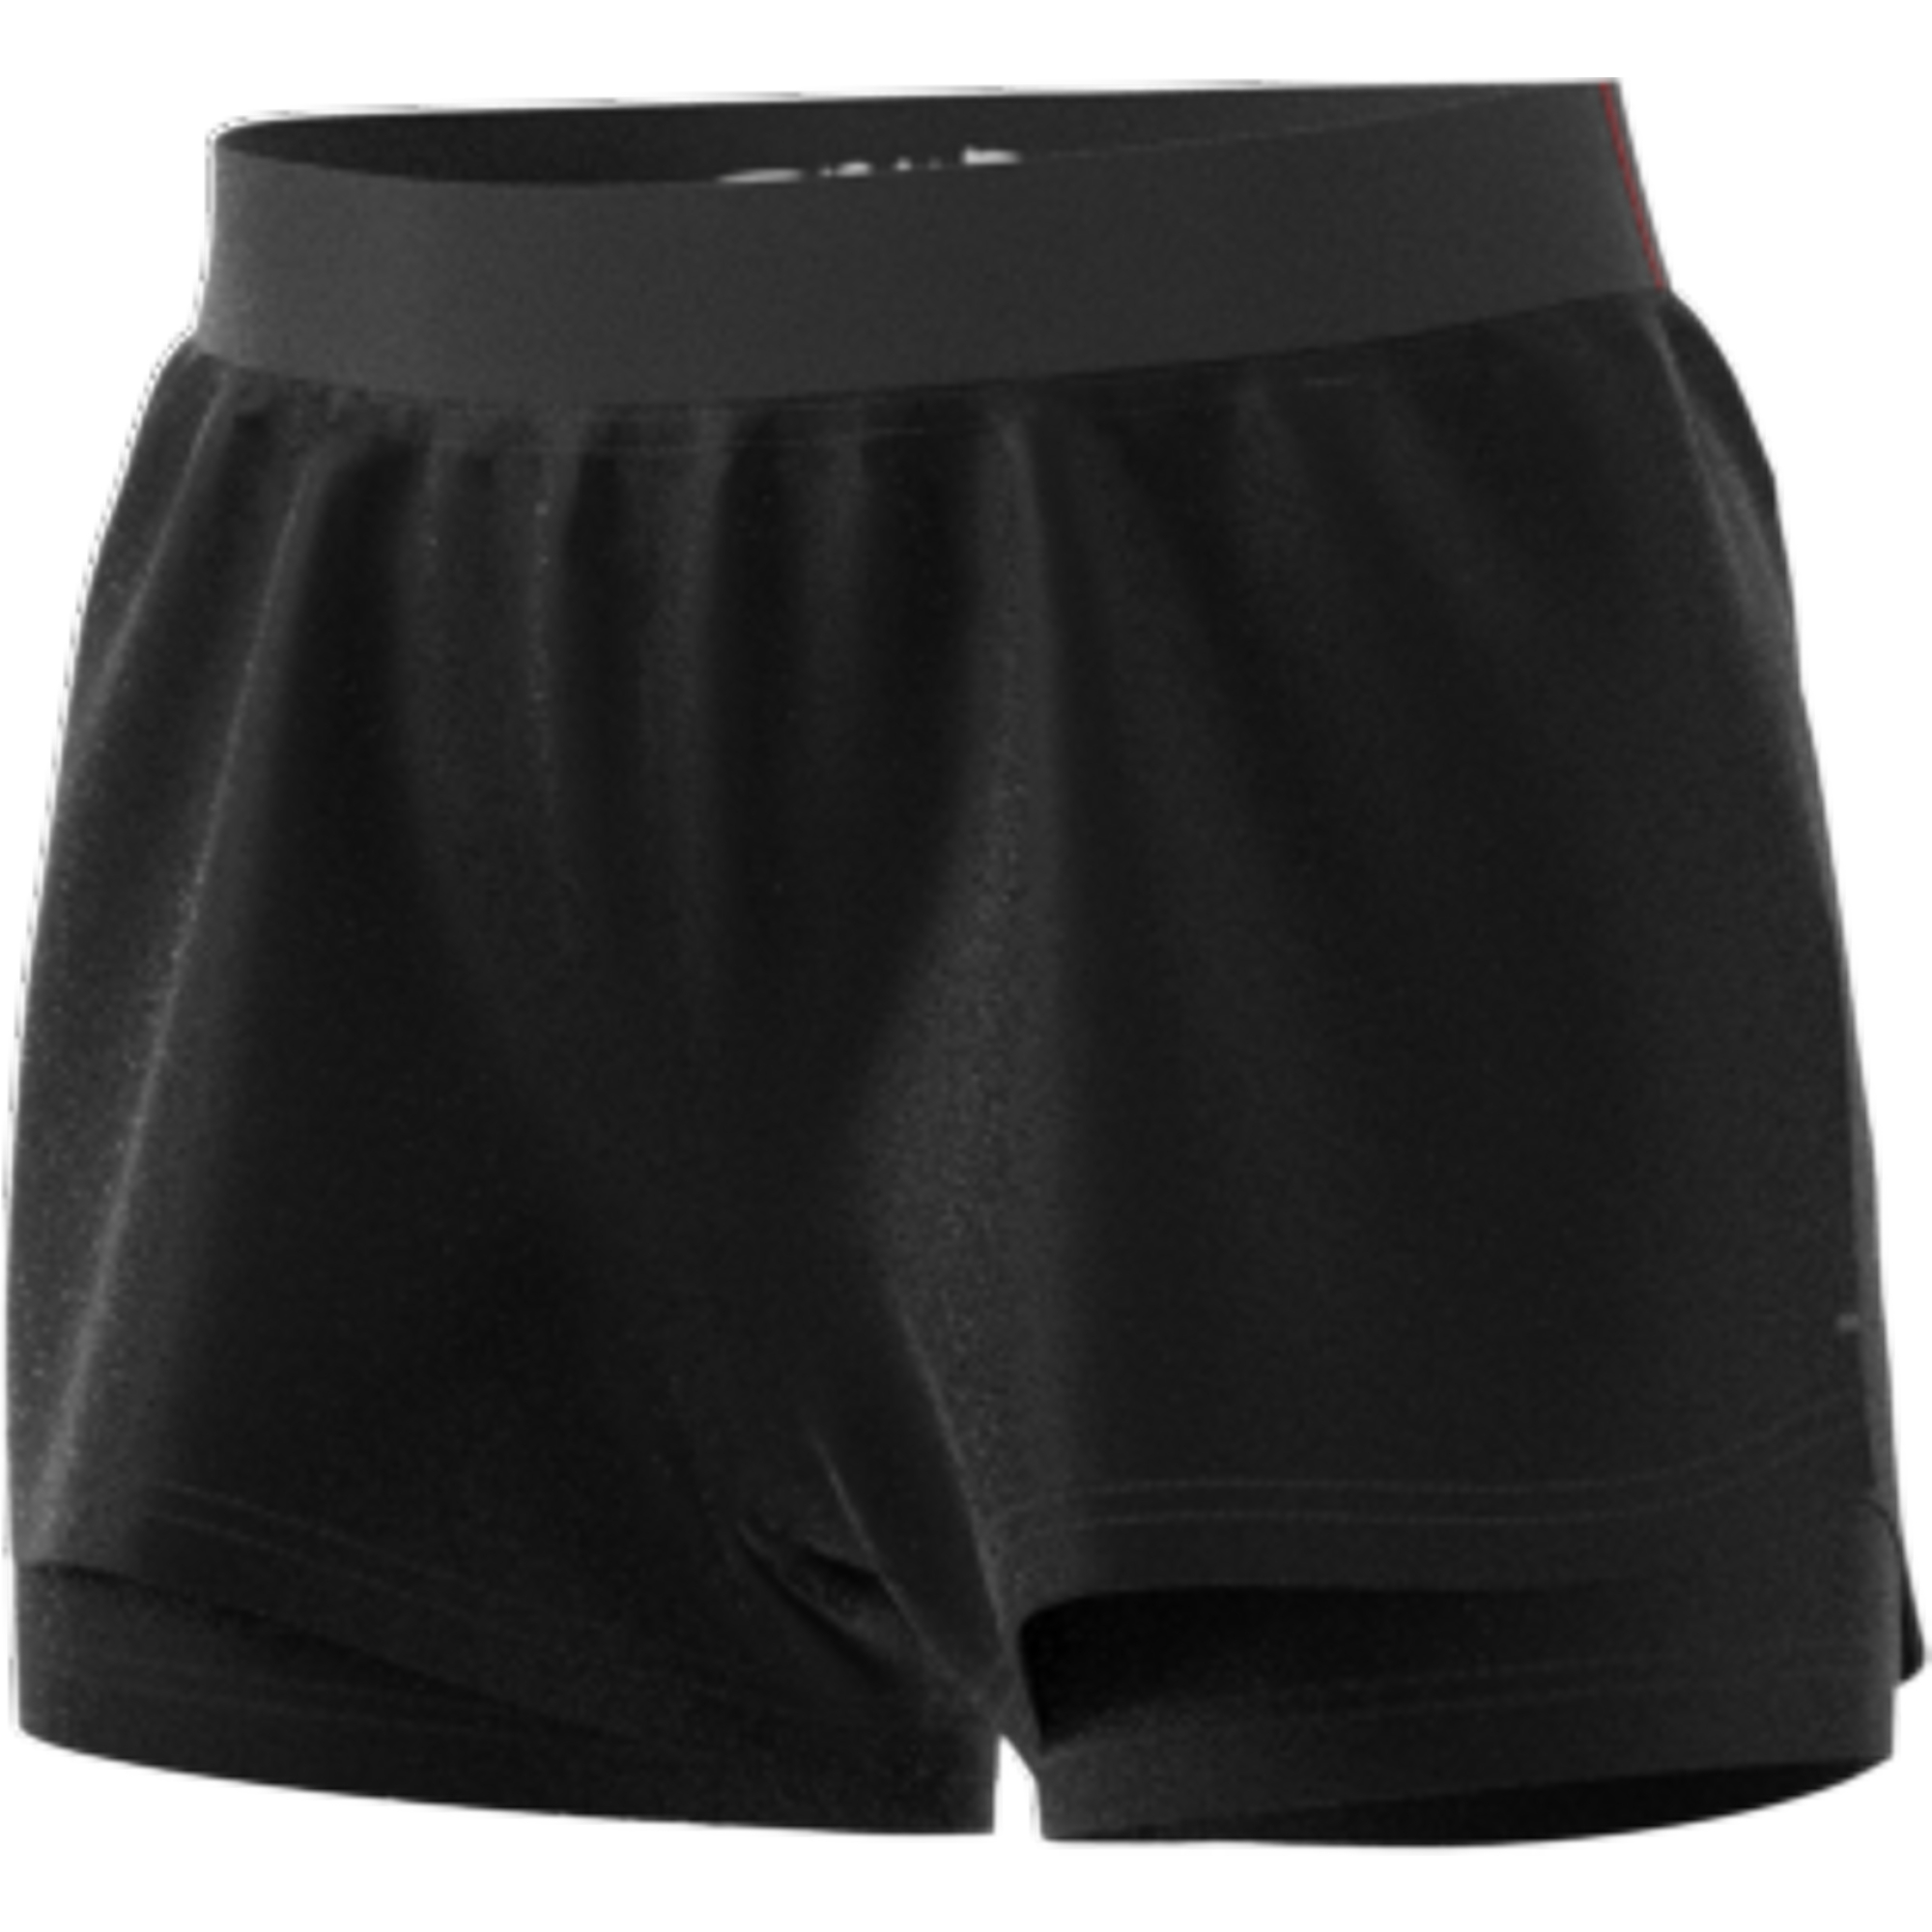 Adidas Women’s 5.10 Climb Shorts 2-in-1 Black